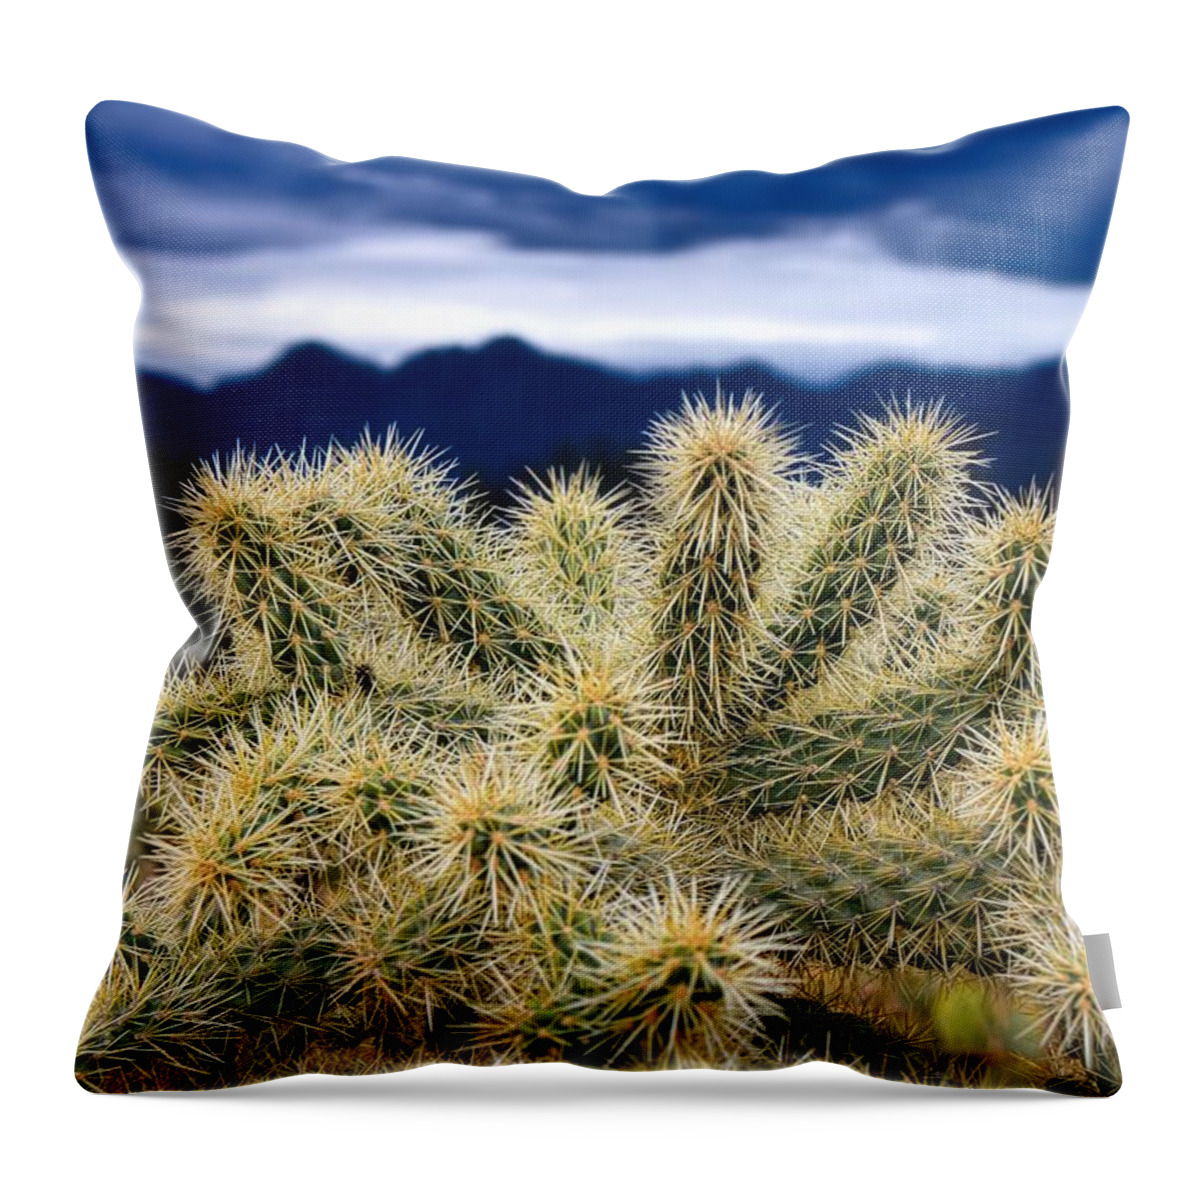 Arizona Throw Pillow featuring the photograph Arizona Teddy Bear Cactus by Henry Kowalski